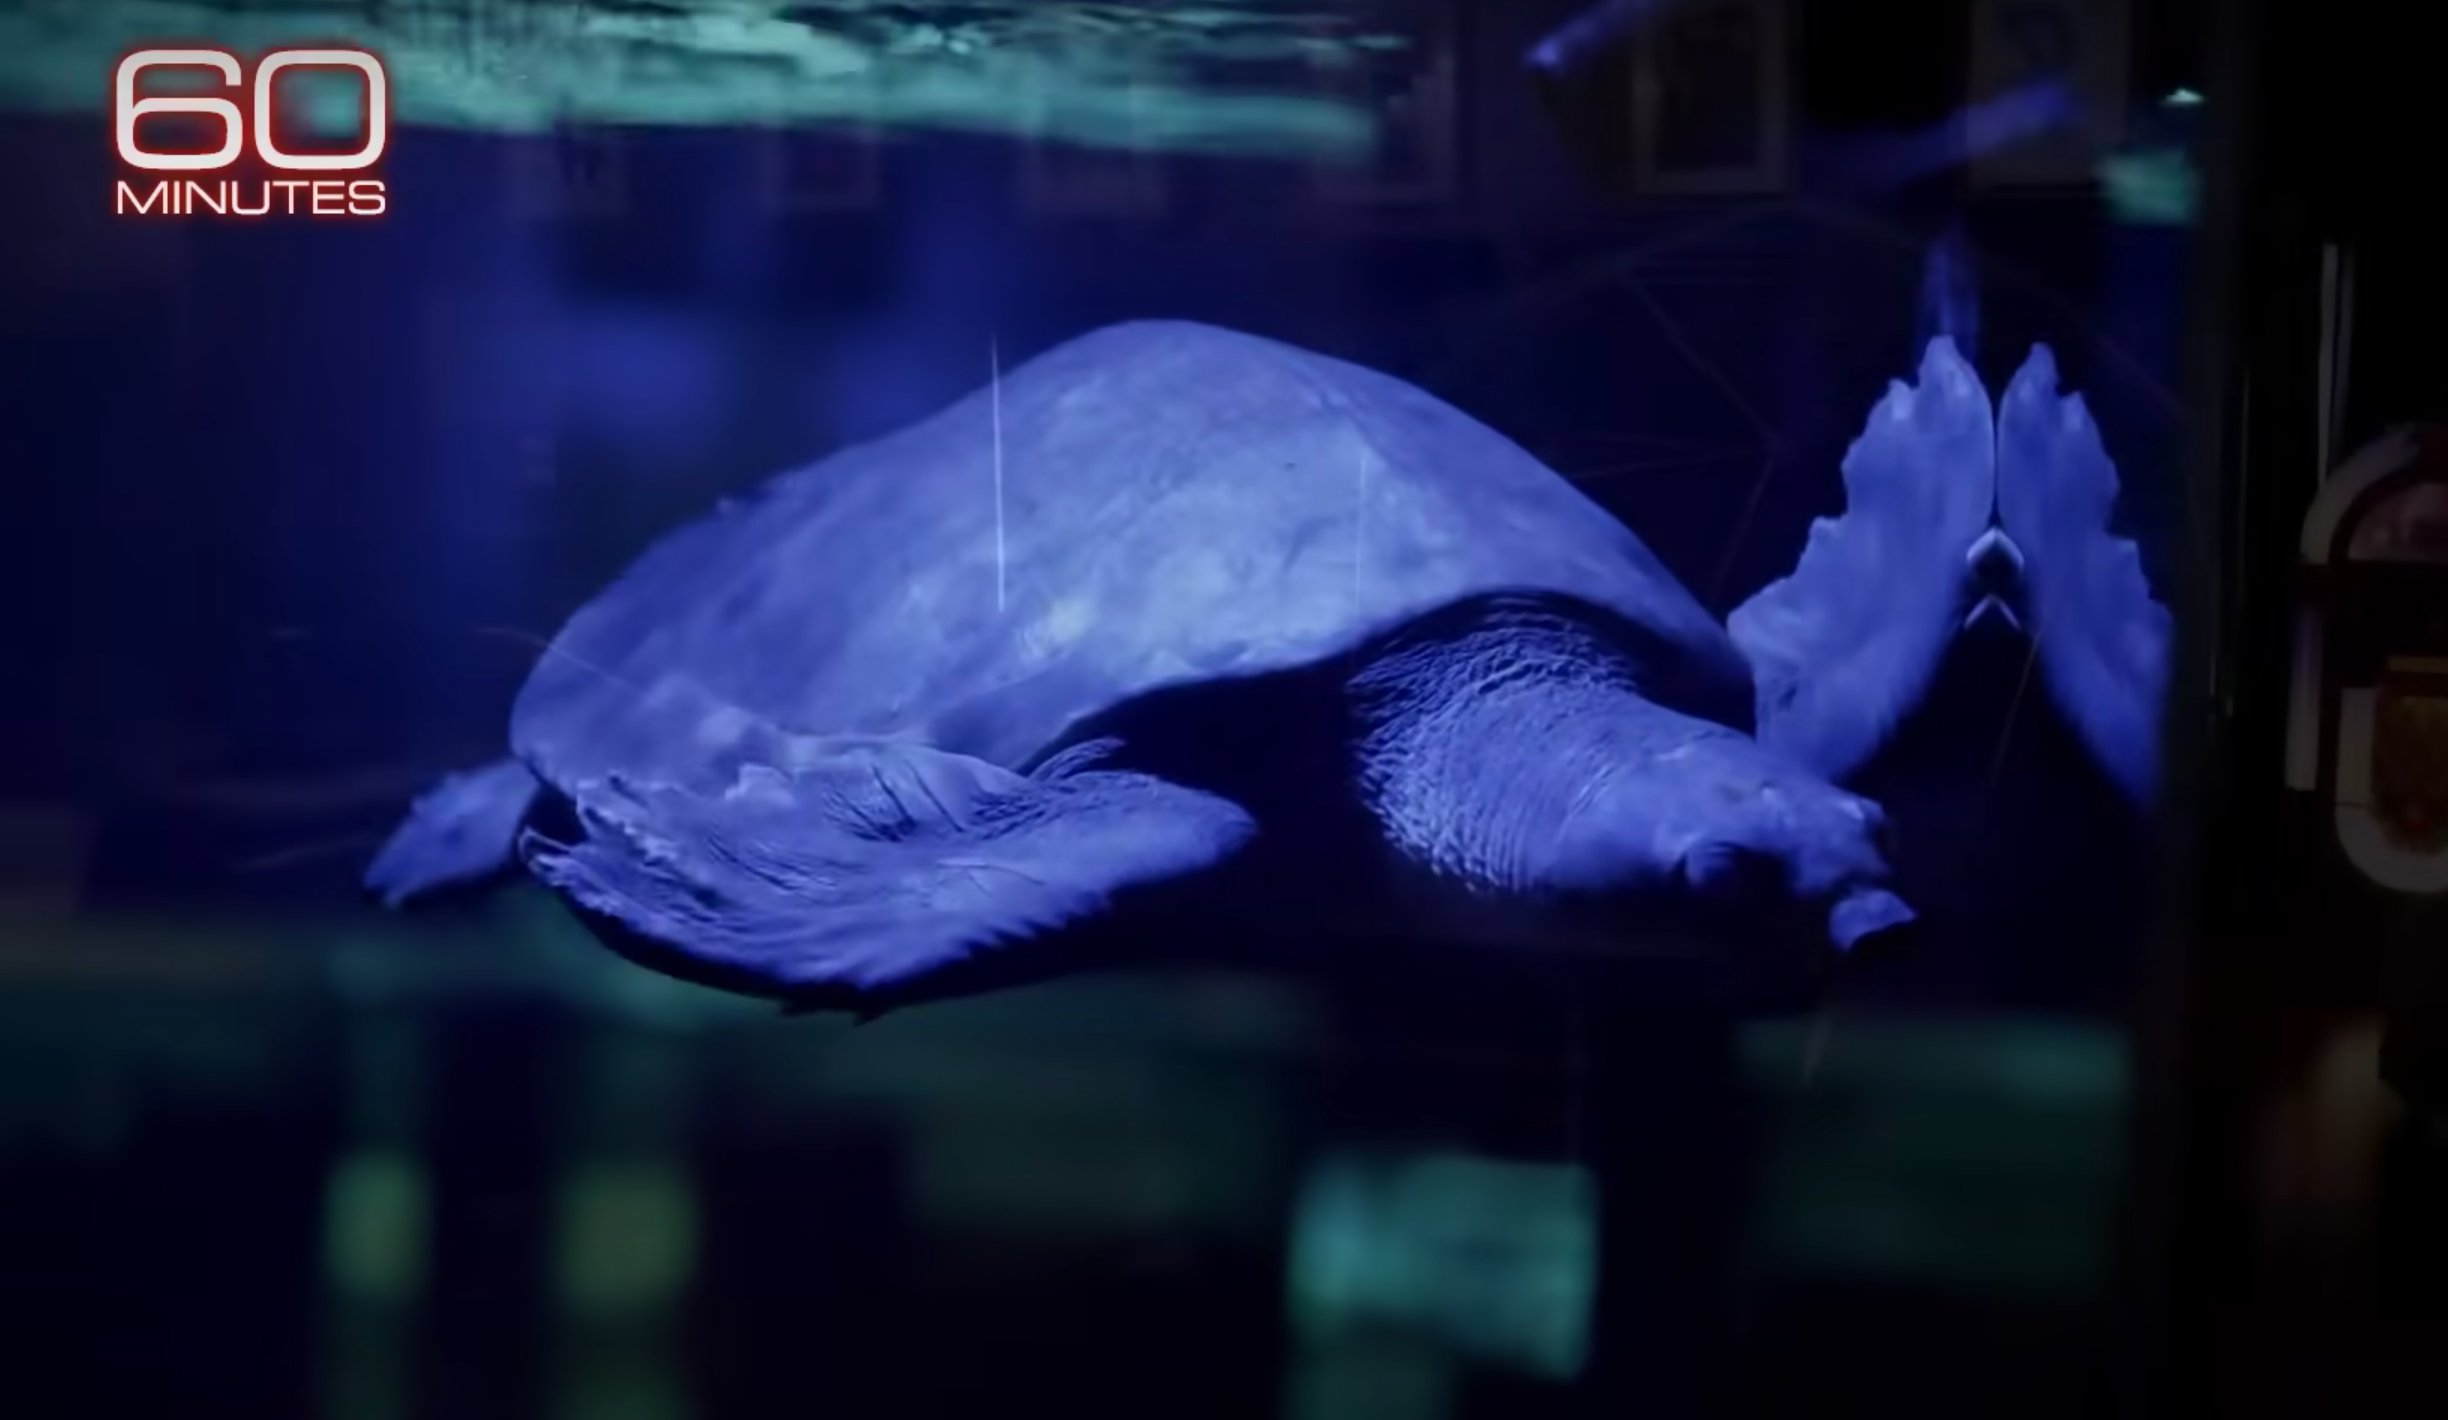 Nicolas Cage's sea turtle inside an aquarium. | Source: YouTube.com/60 Minutes